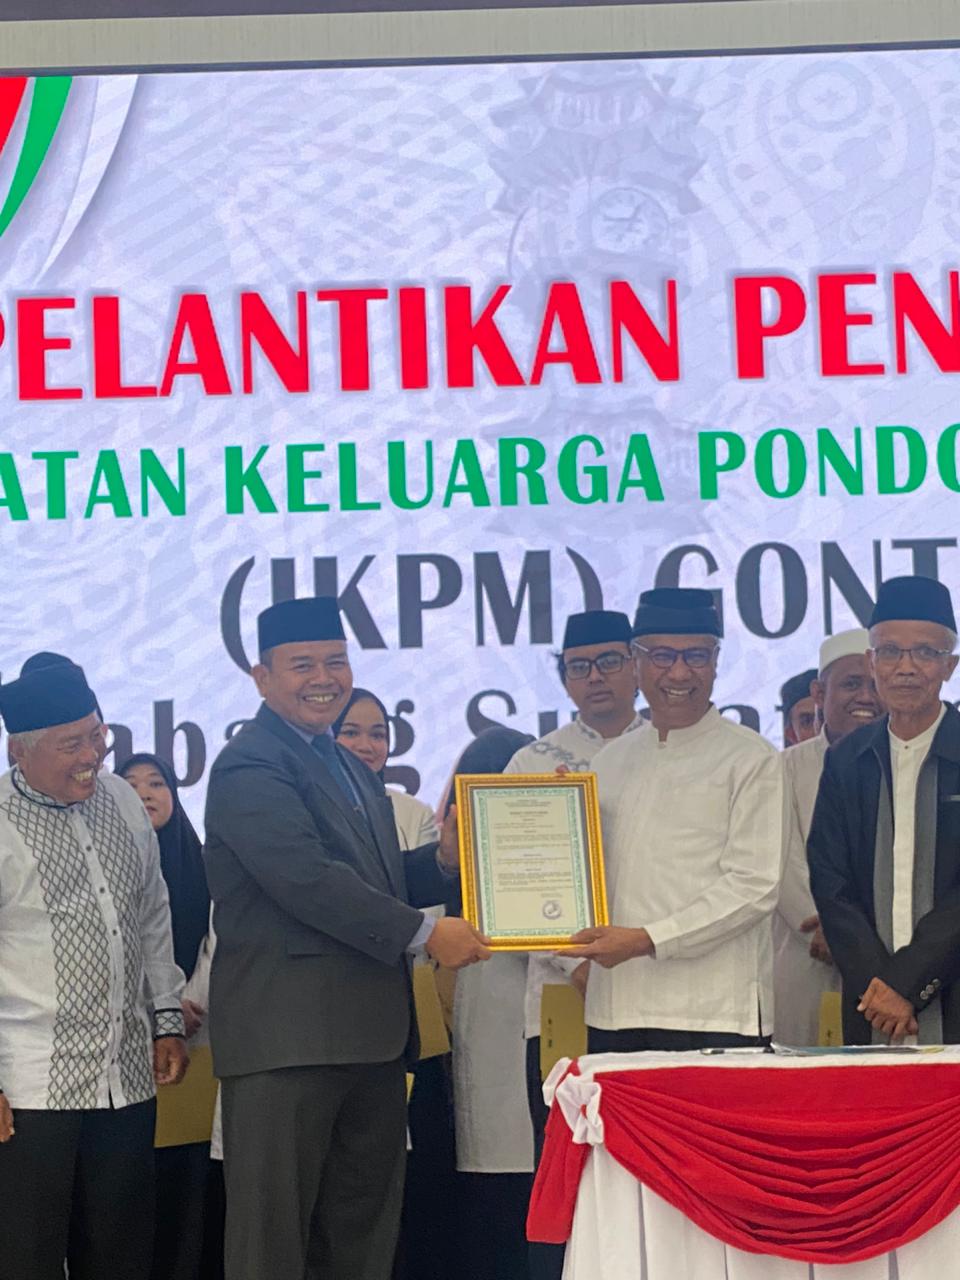 Kiprah Alumni, Bapak Pimpinan Pondok Modern Darussalam Gontor Menghadiri Pelantikan IKPM Cabang Sumatera Barat